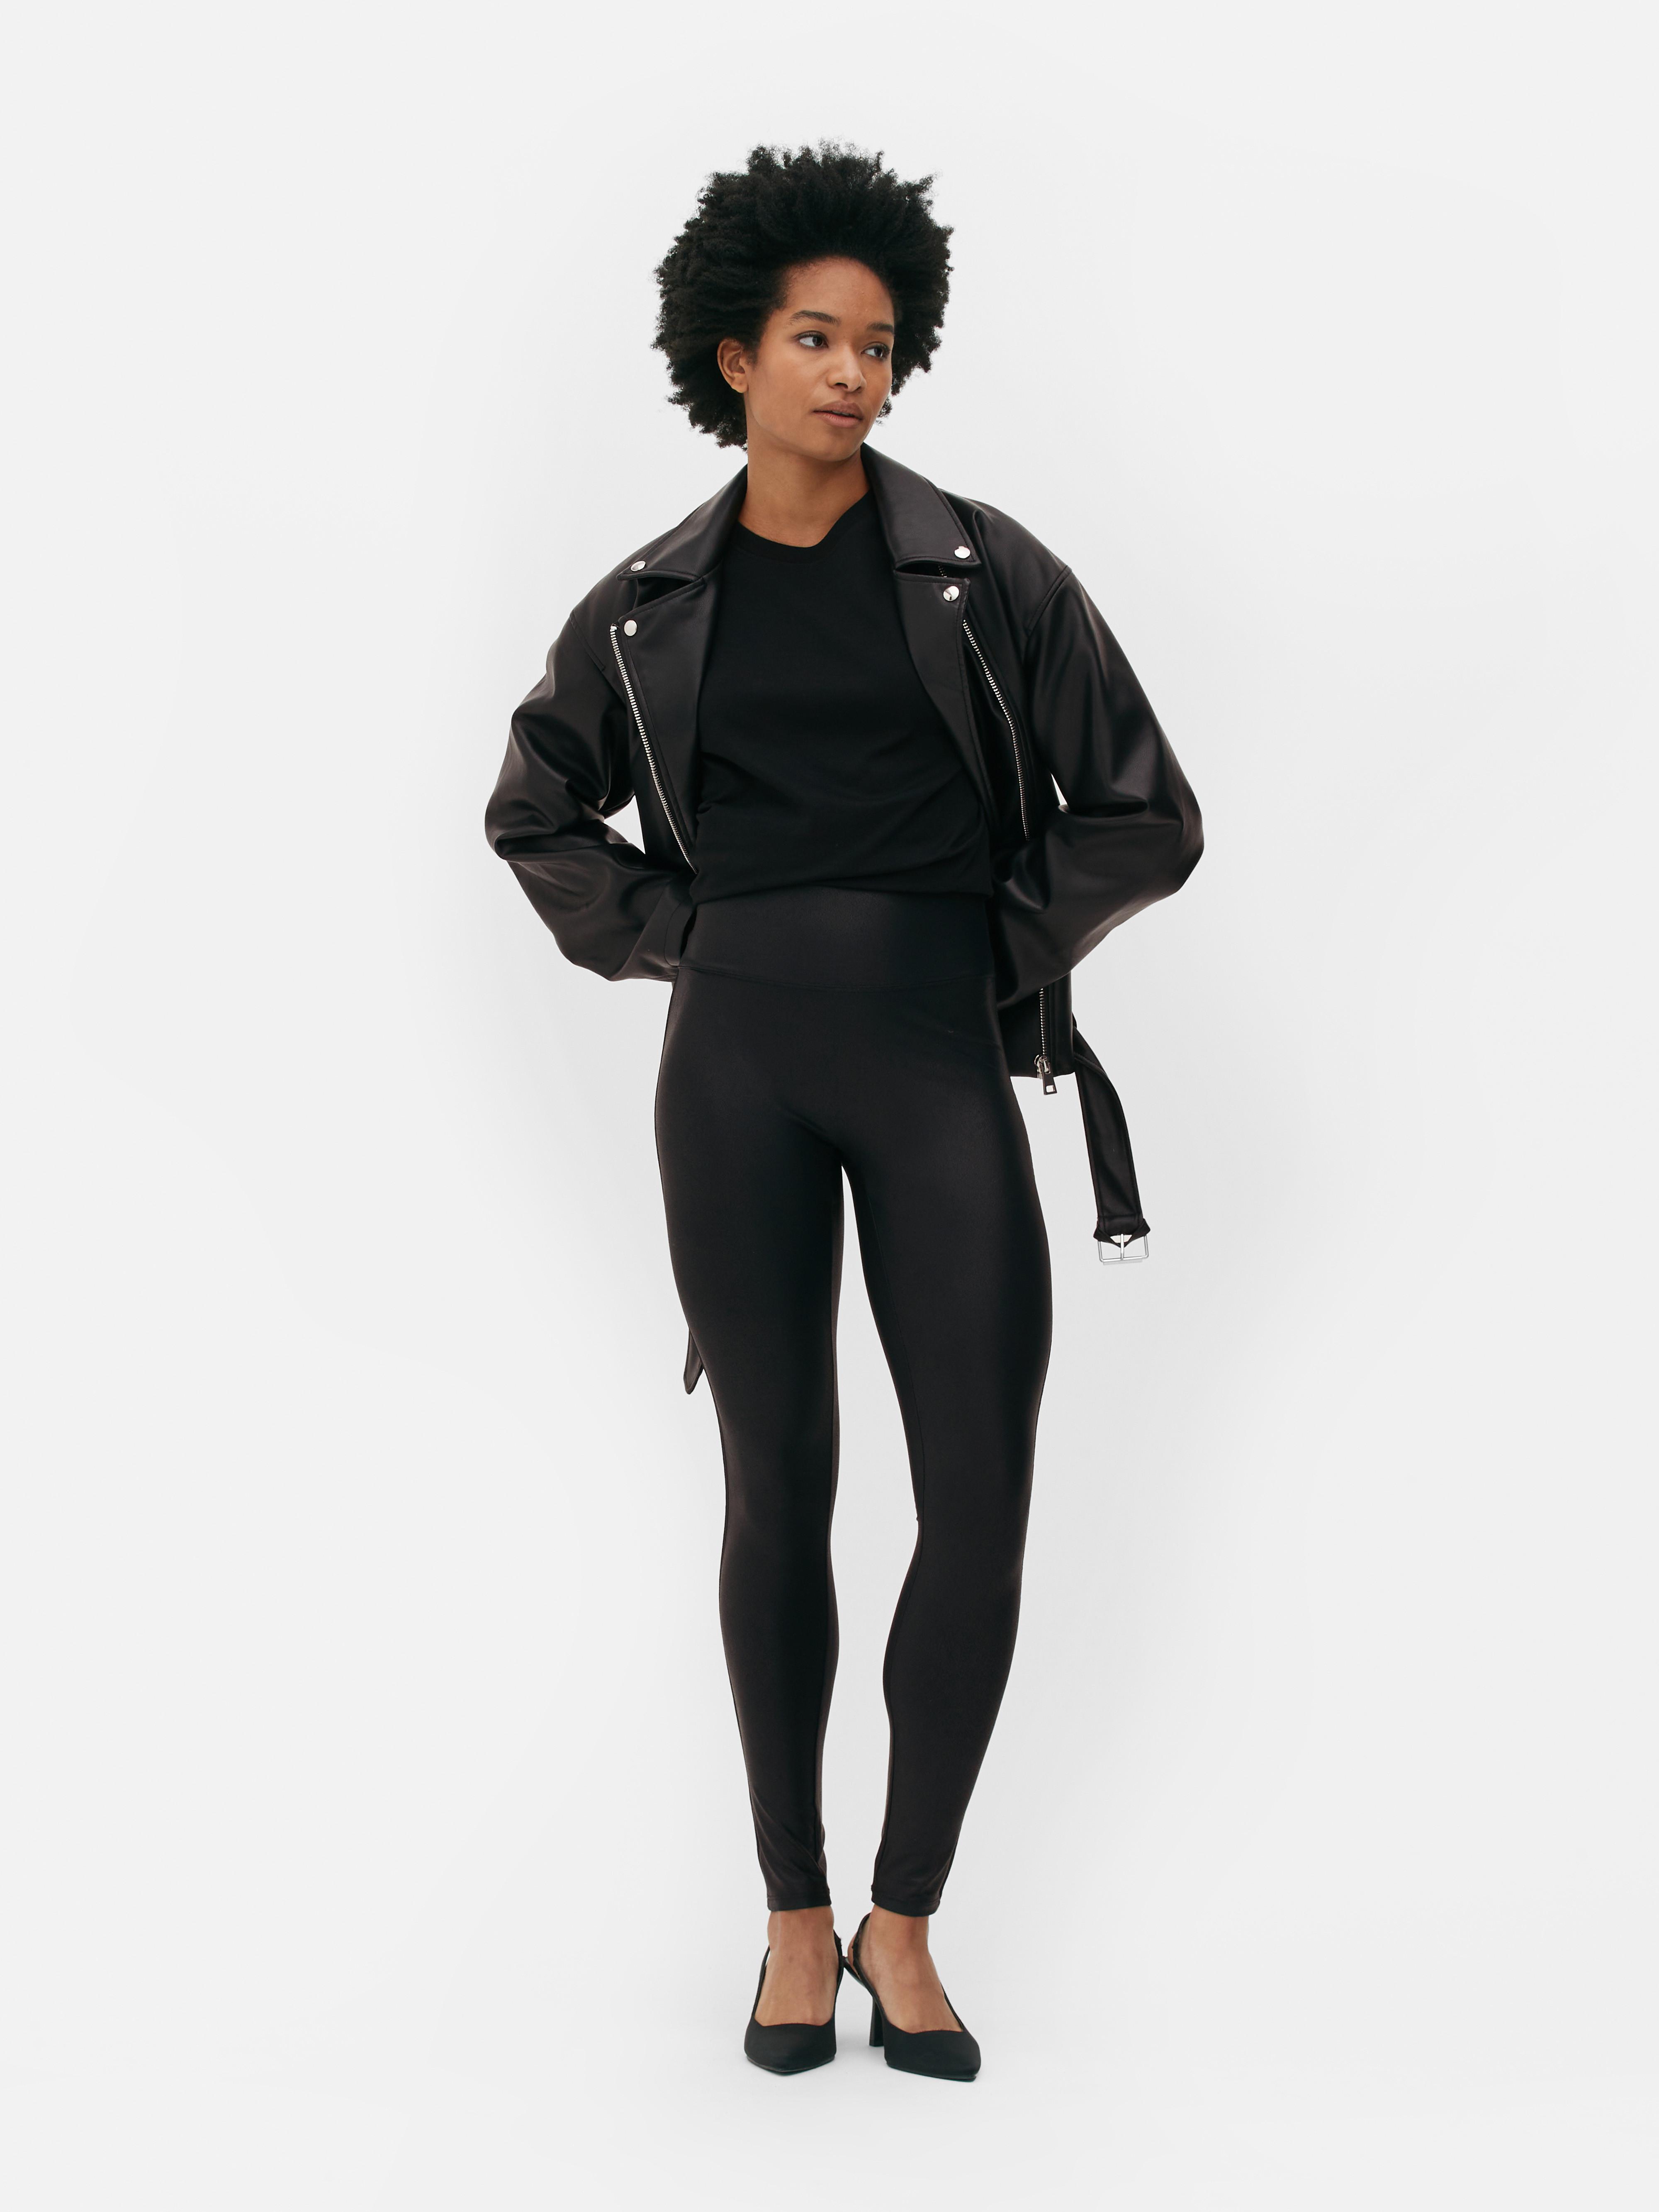 Primark shoppers rush to buy 'incredible' velvet lined leggings to